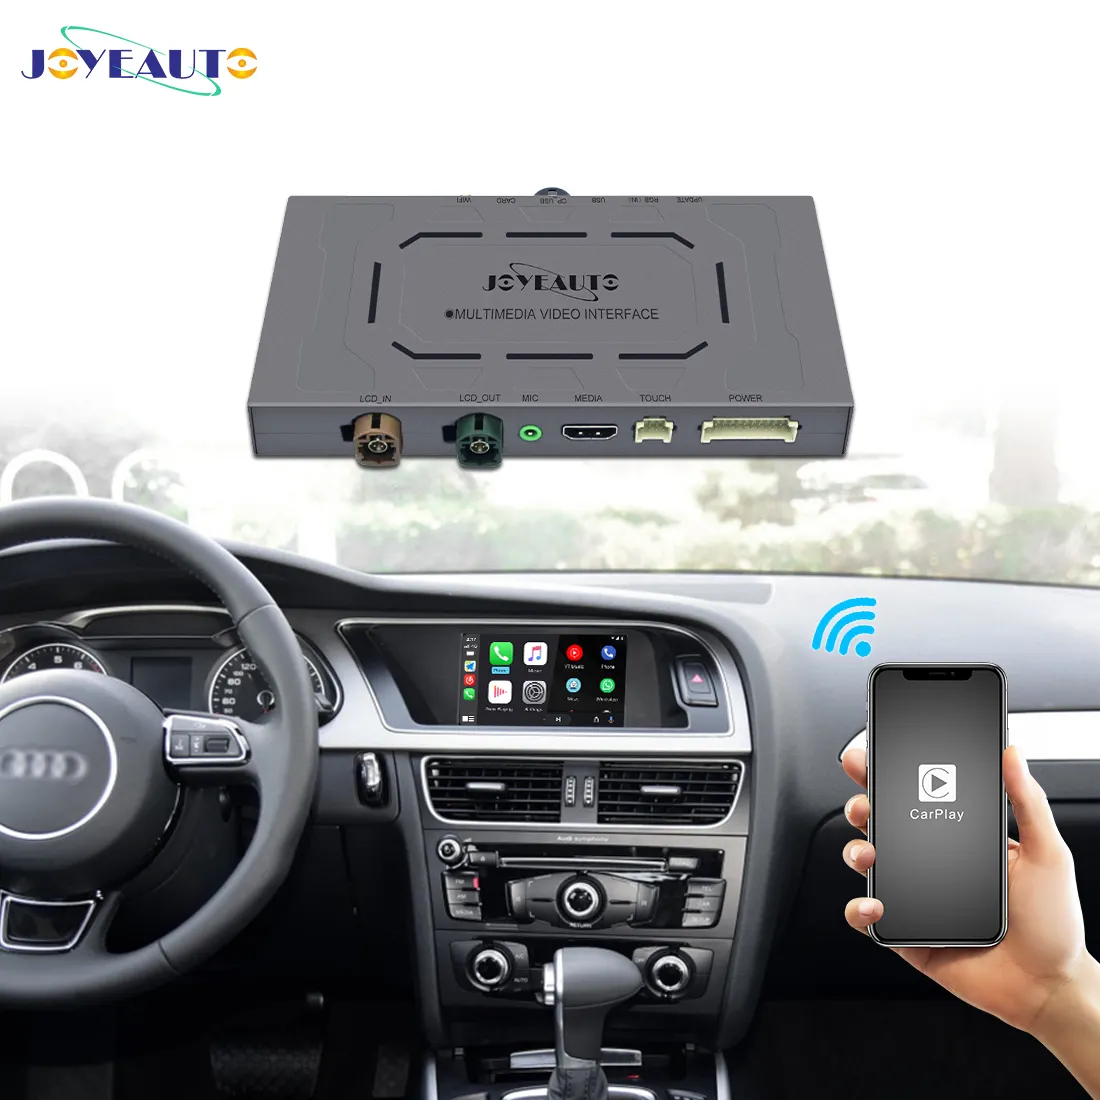 Wireless Joyeauto Apple Carplay Car Play Android Auto Interface per AUDI A4 B8 8k A5 Q5 Carplay Adapter Wireless Apple